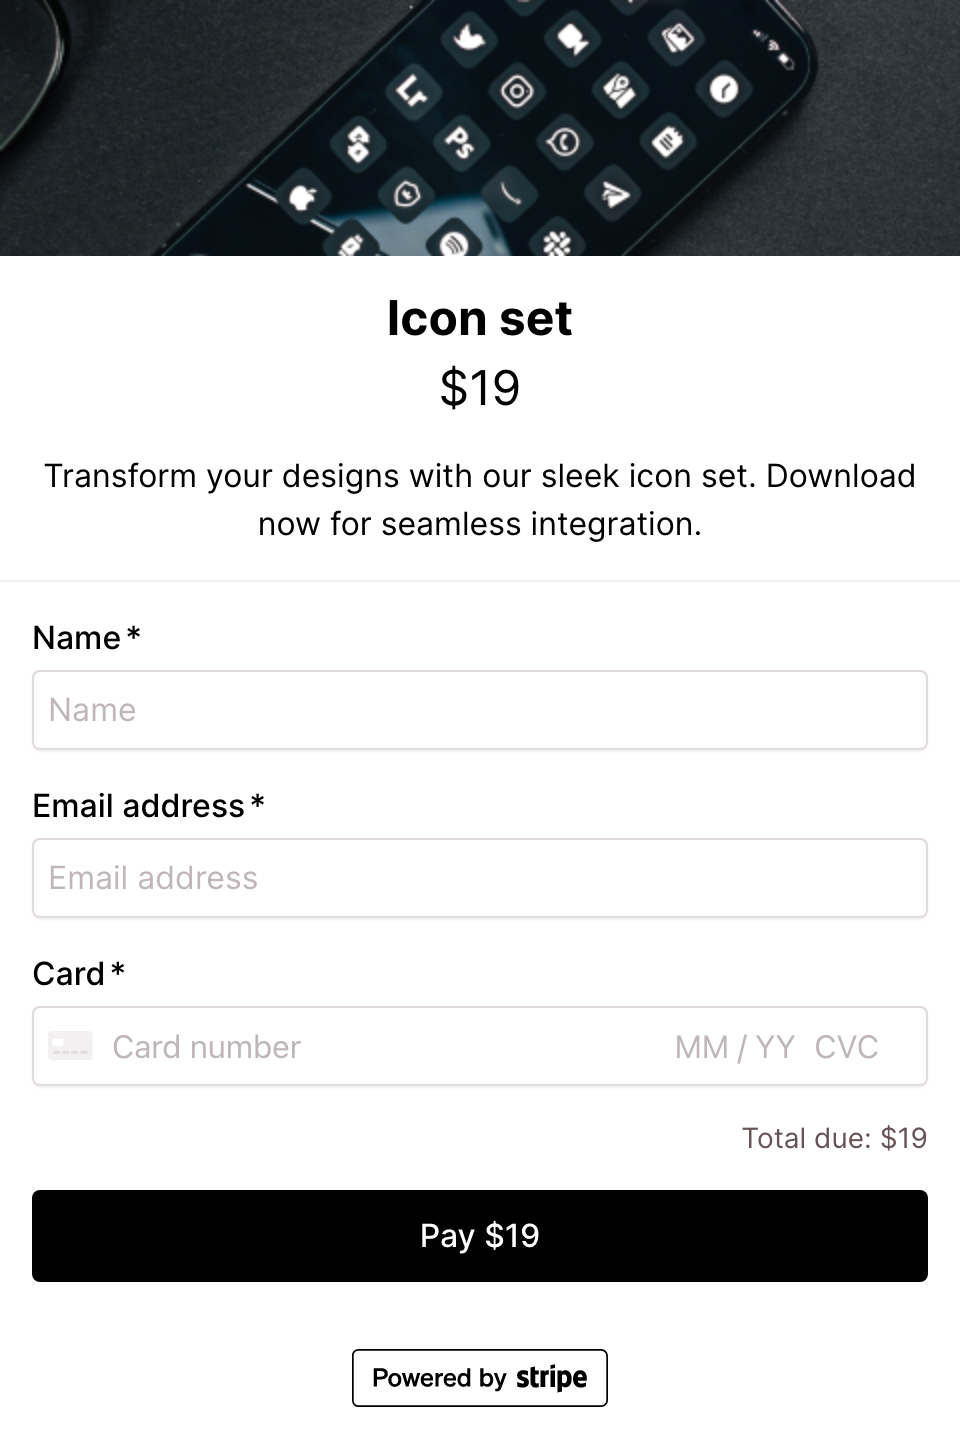 Icon set checkout form